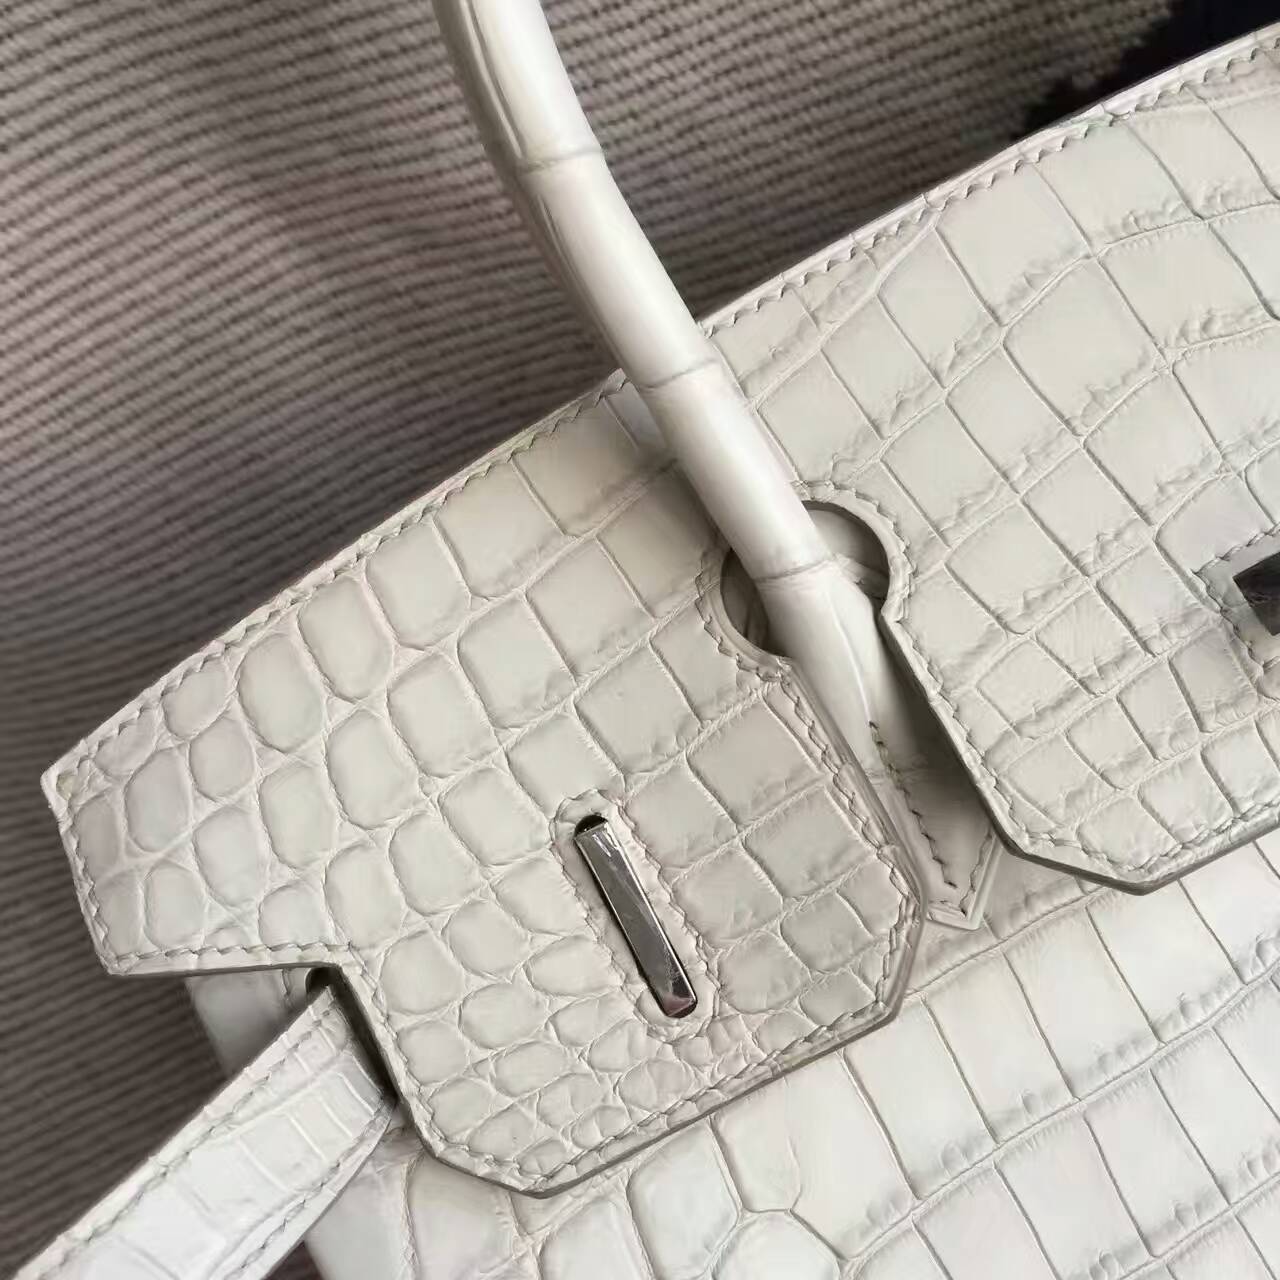 Hand Stitching Hermes Crocodile Matt Leather Birkin30cm Handbag in 8L Beton